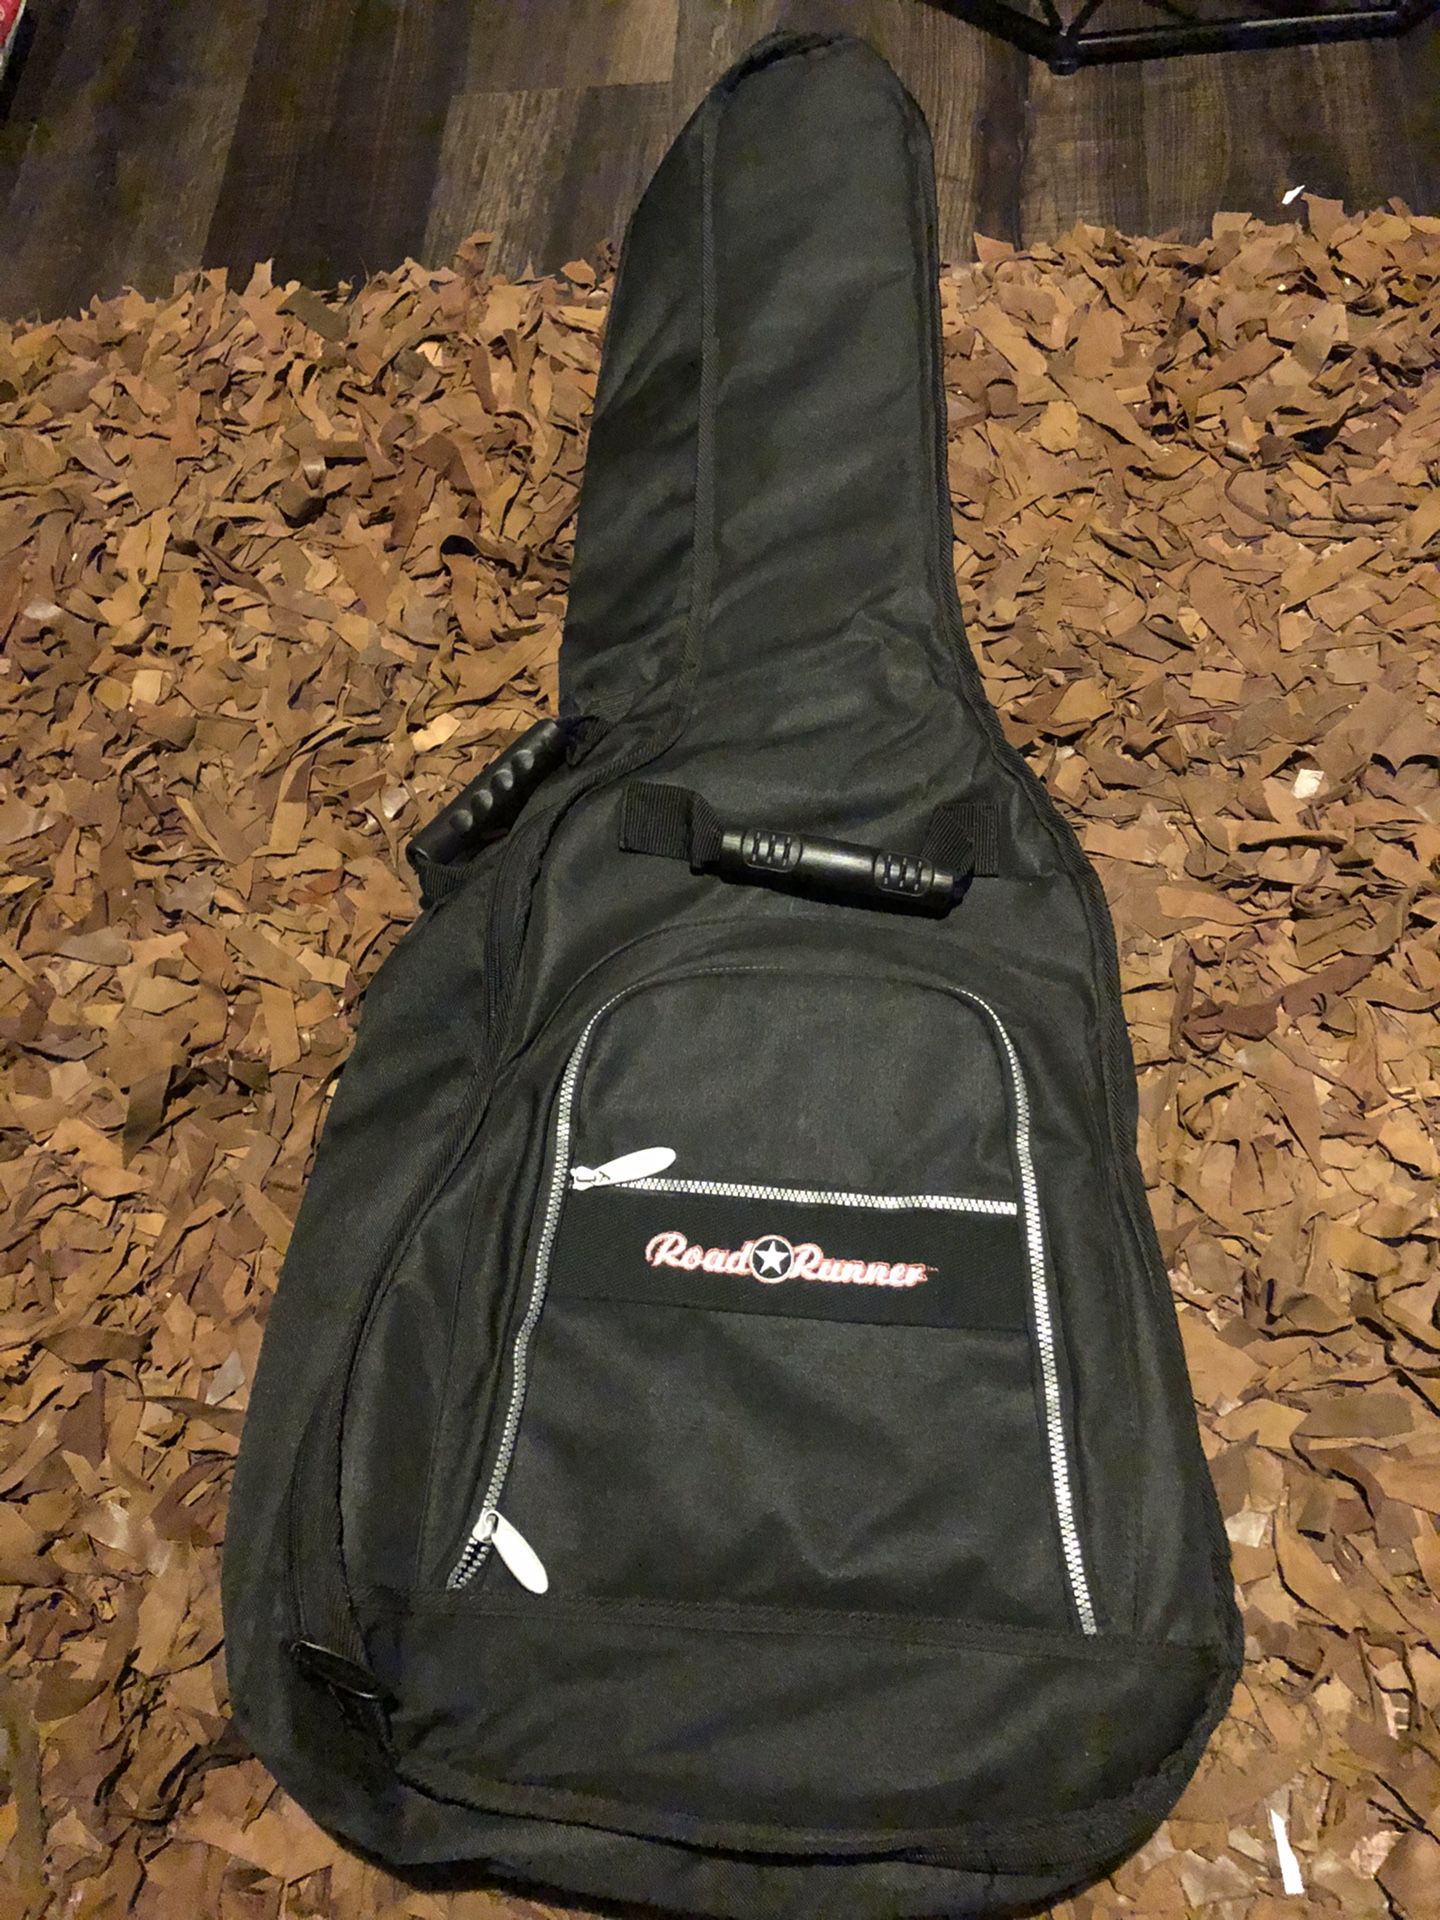 Road Runner acoustic guitar gig bag